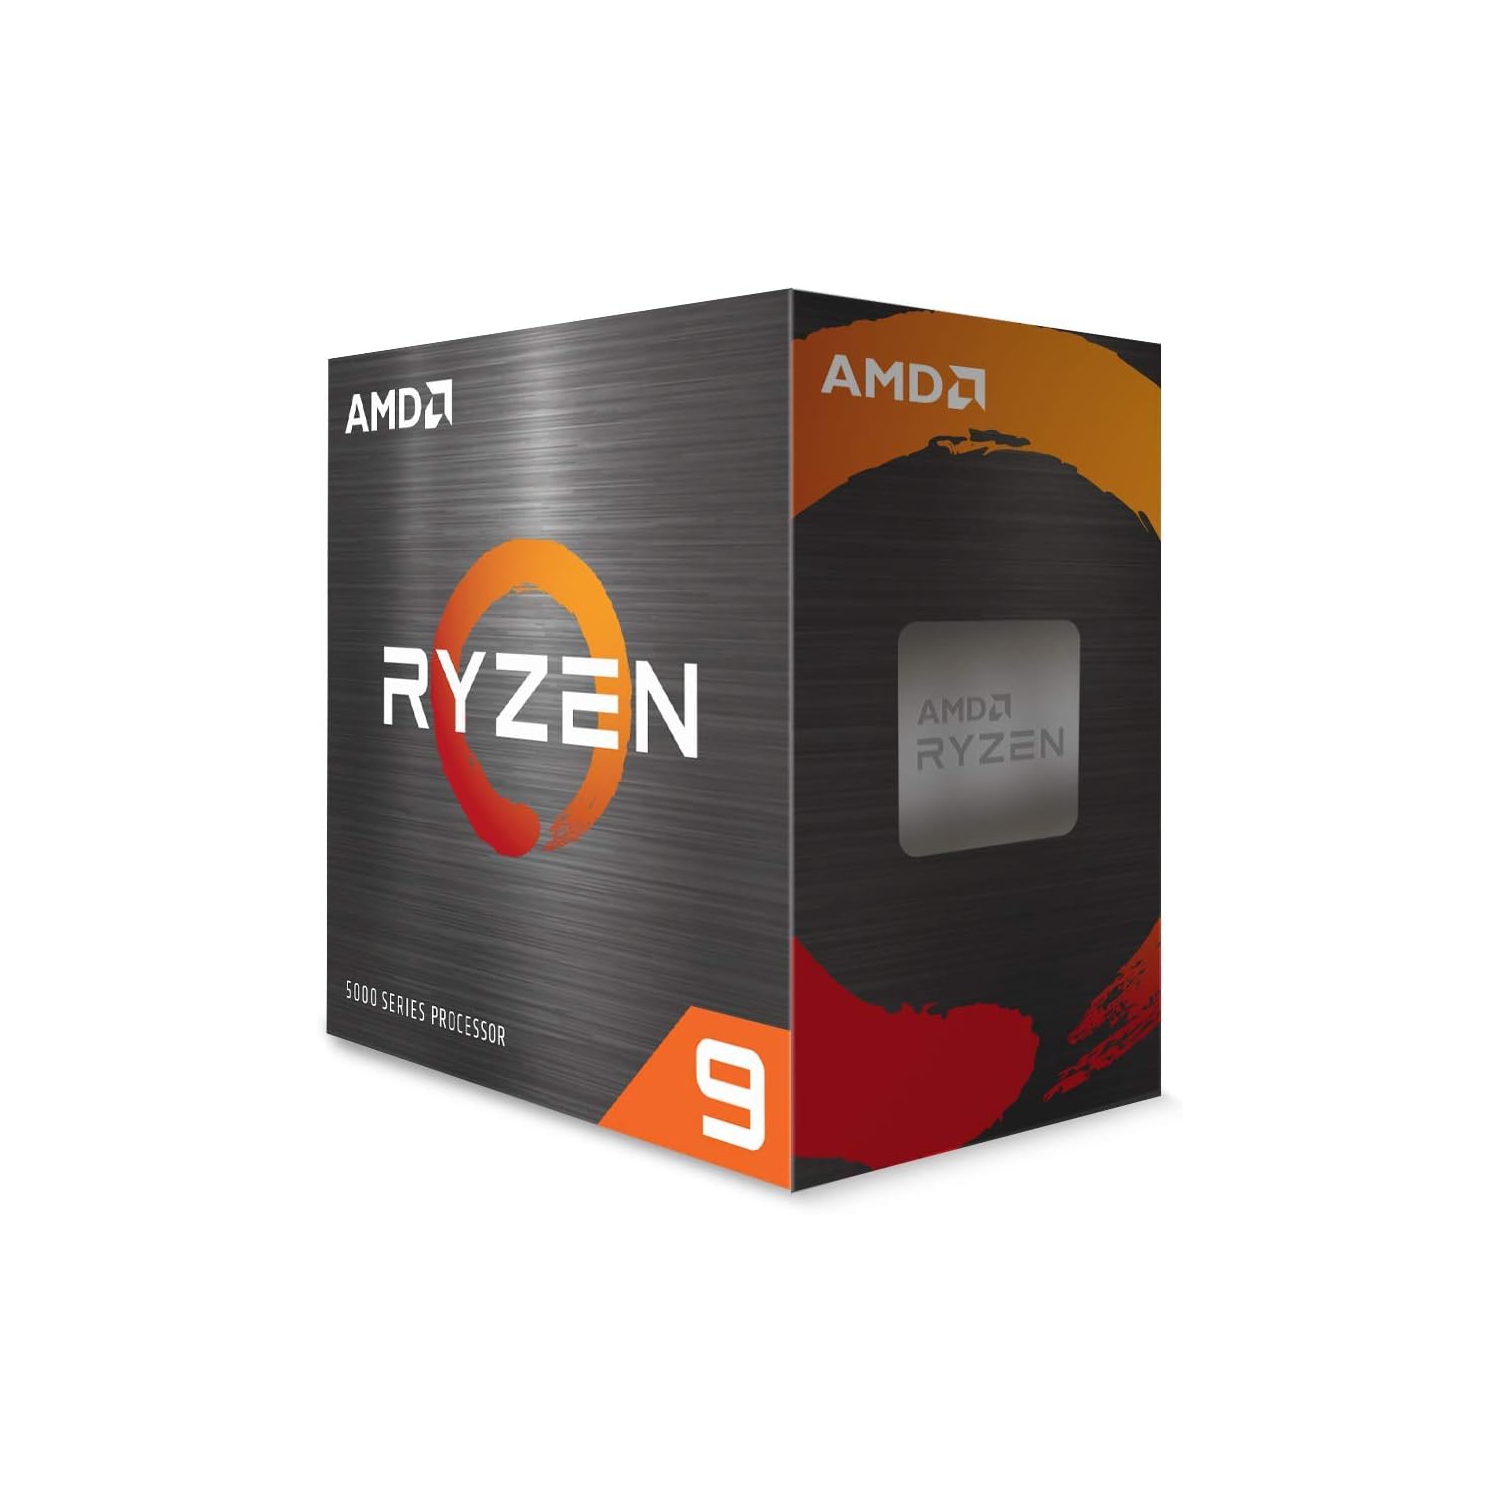 Refurbished (Good) AMD Ryzen 9 5900X Desktop Processor Unlocked 12 Cores upto 4.80 GHz AM4 Socket ( without cooler )